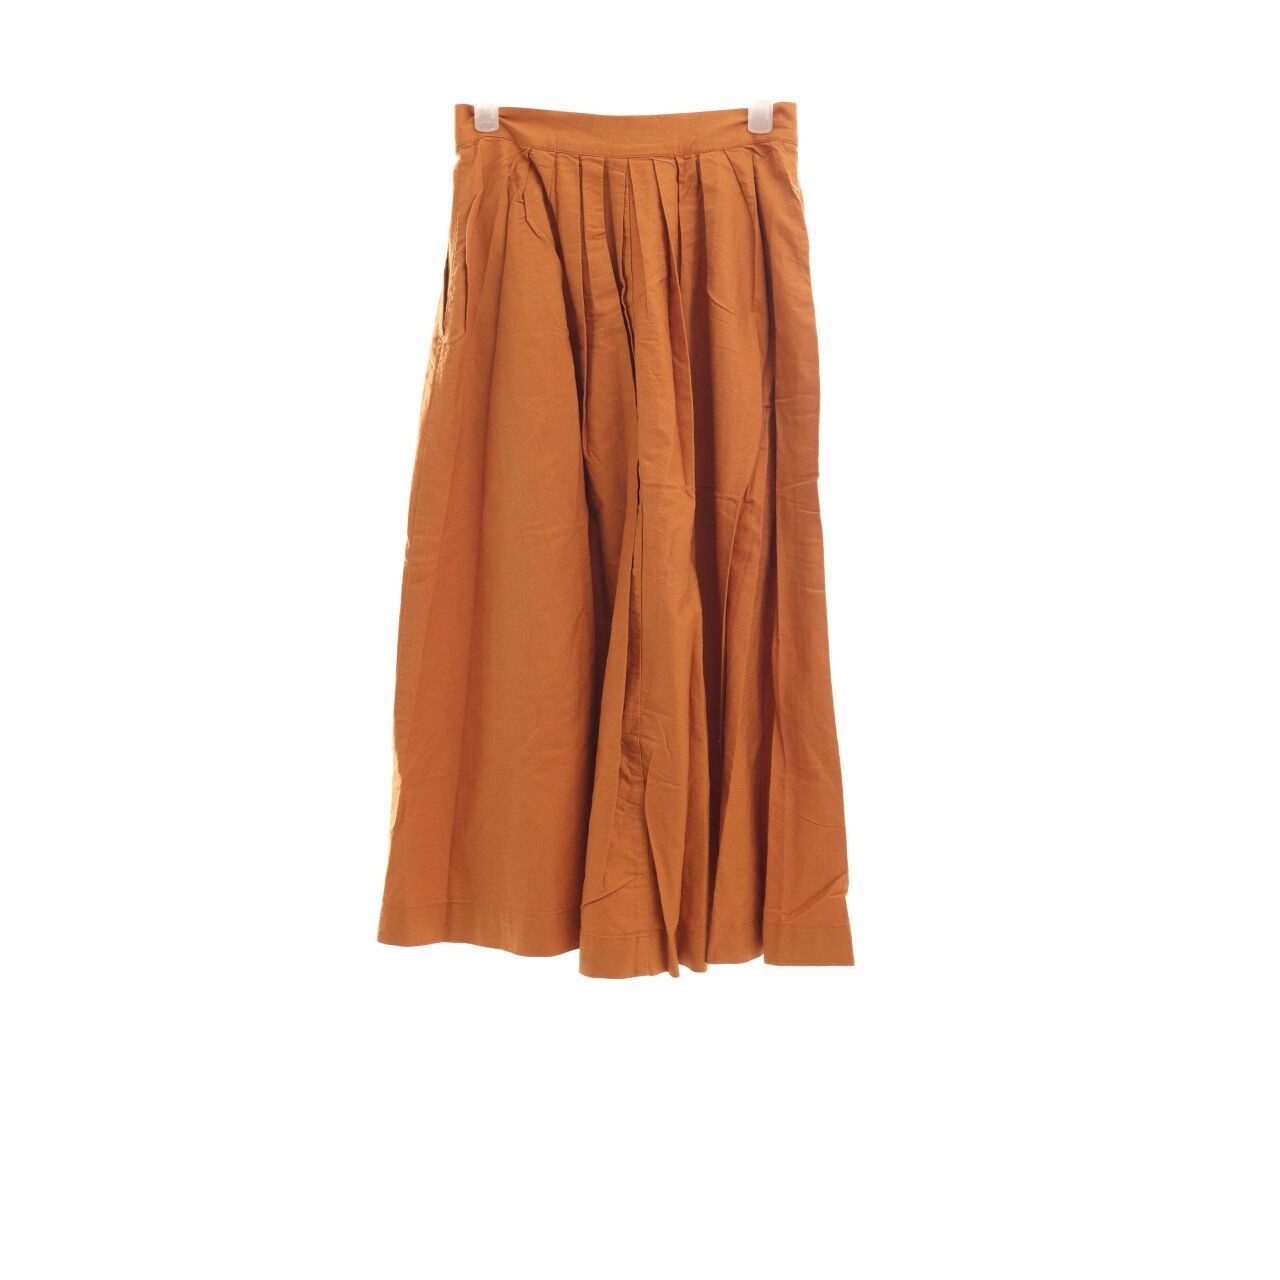 H&M Camel Orange Midi Skirt